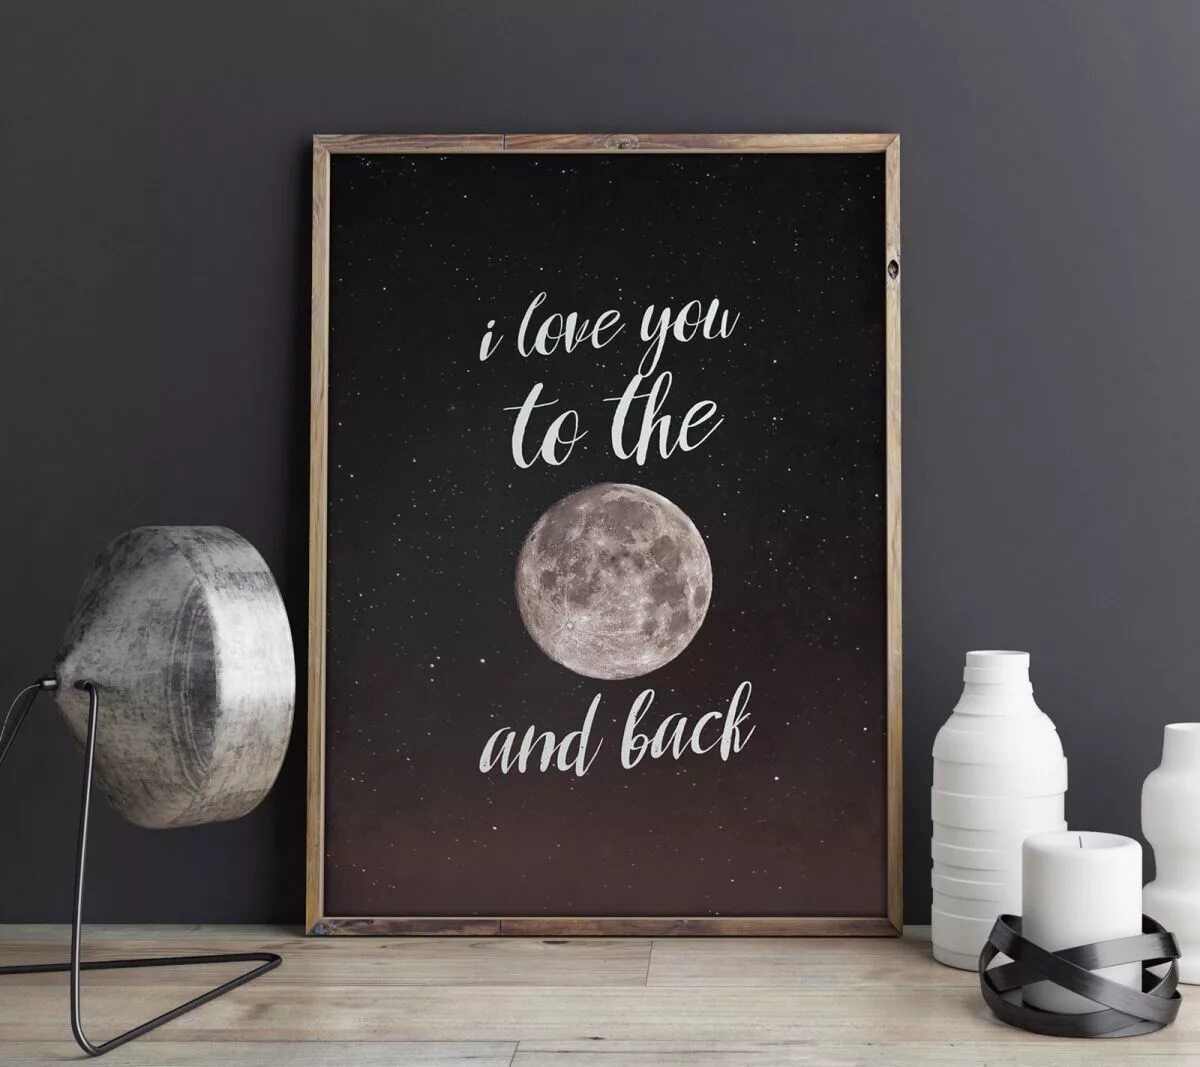 Предложение moon. Love you to the Moon and back торт. Торт to the Moon and back. Бенто торт to the Moon and back. Love you to the Moon and back фото.